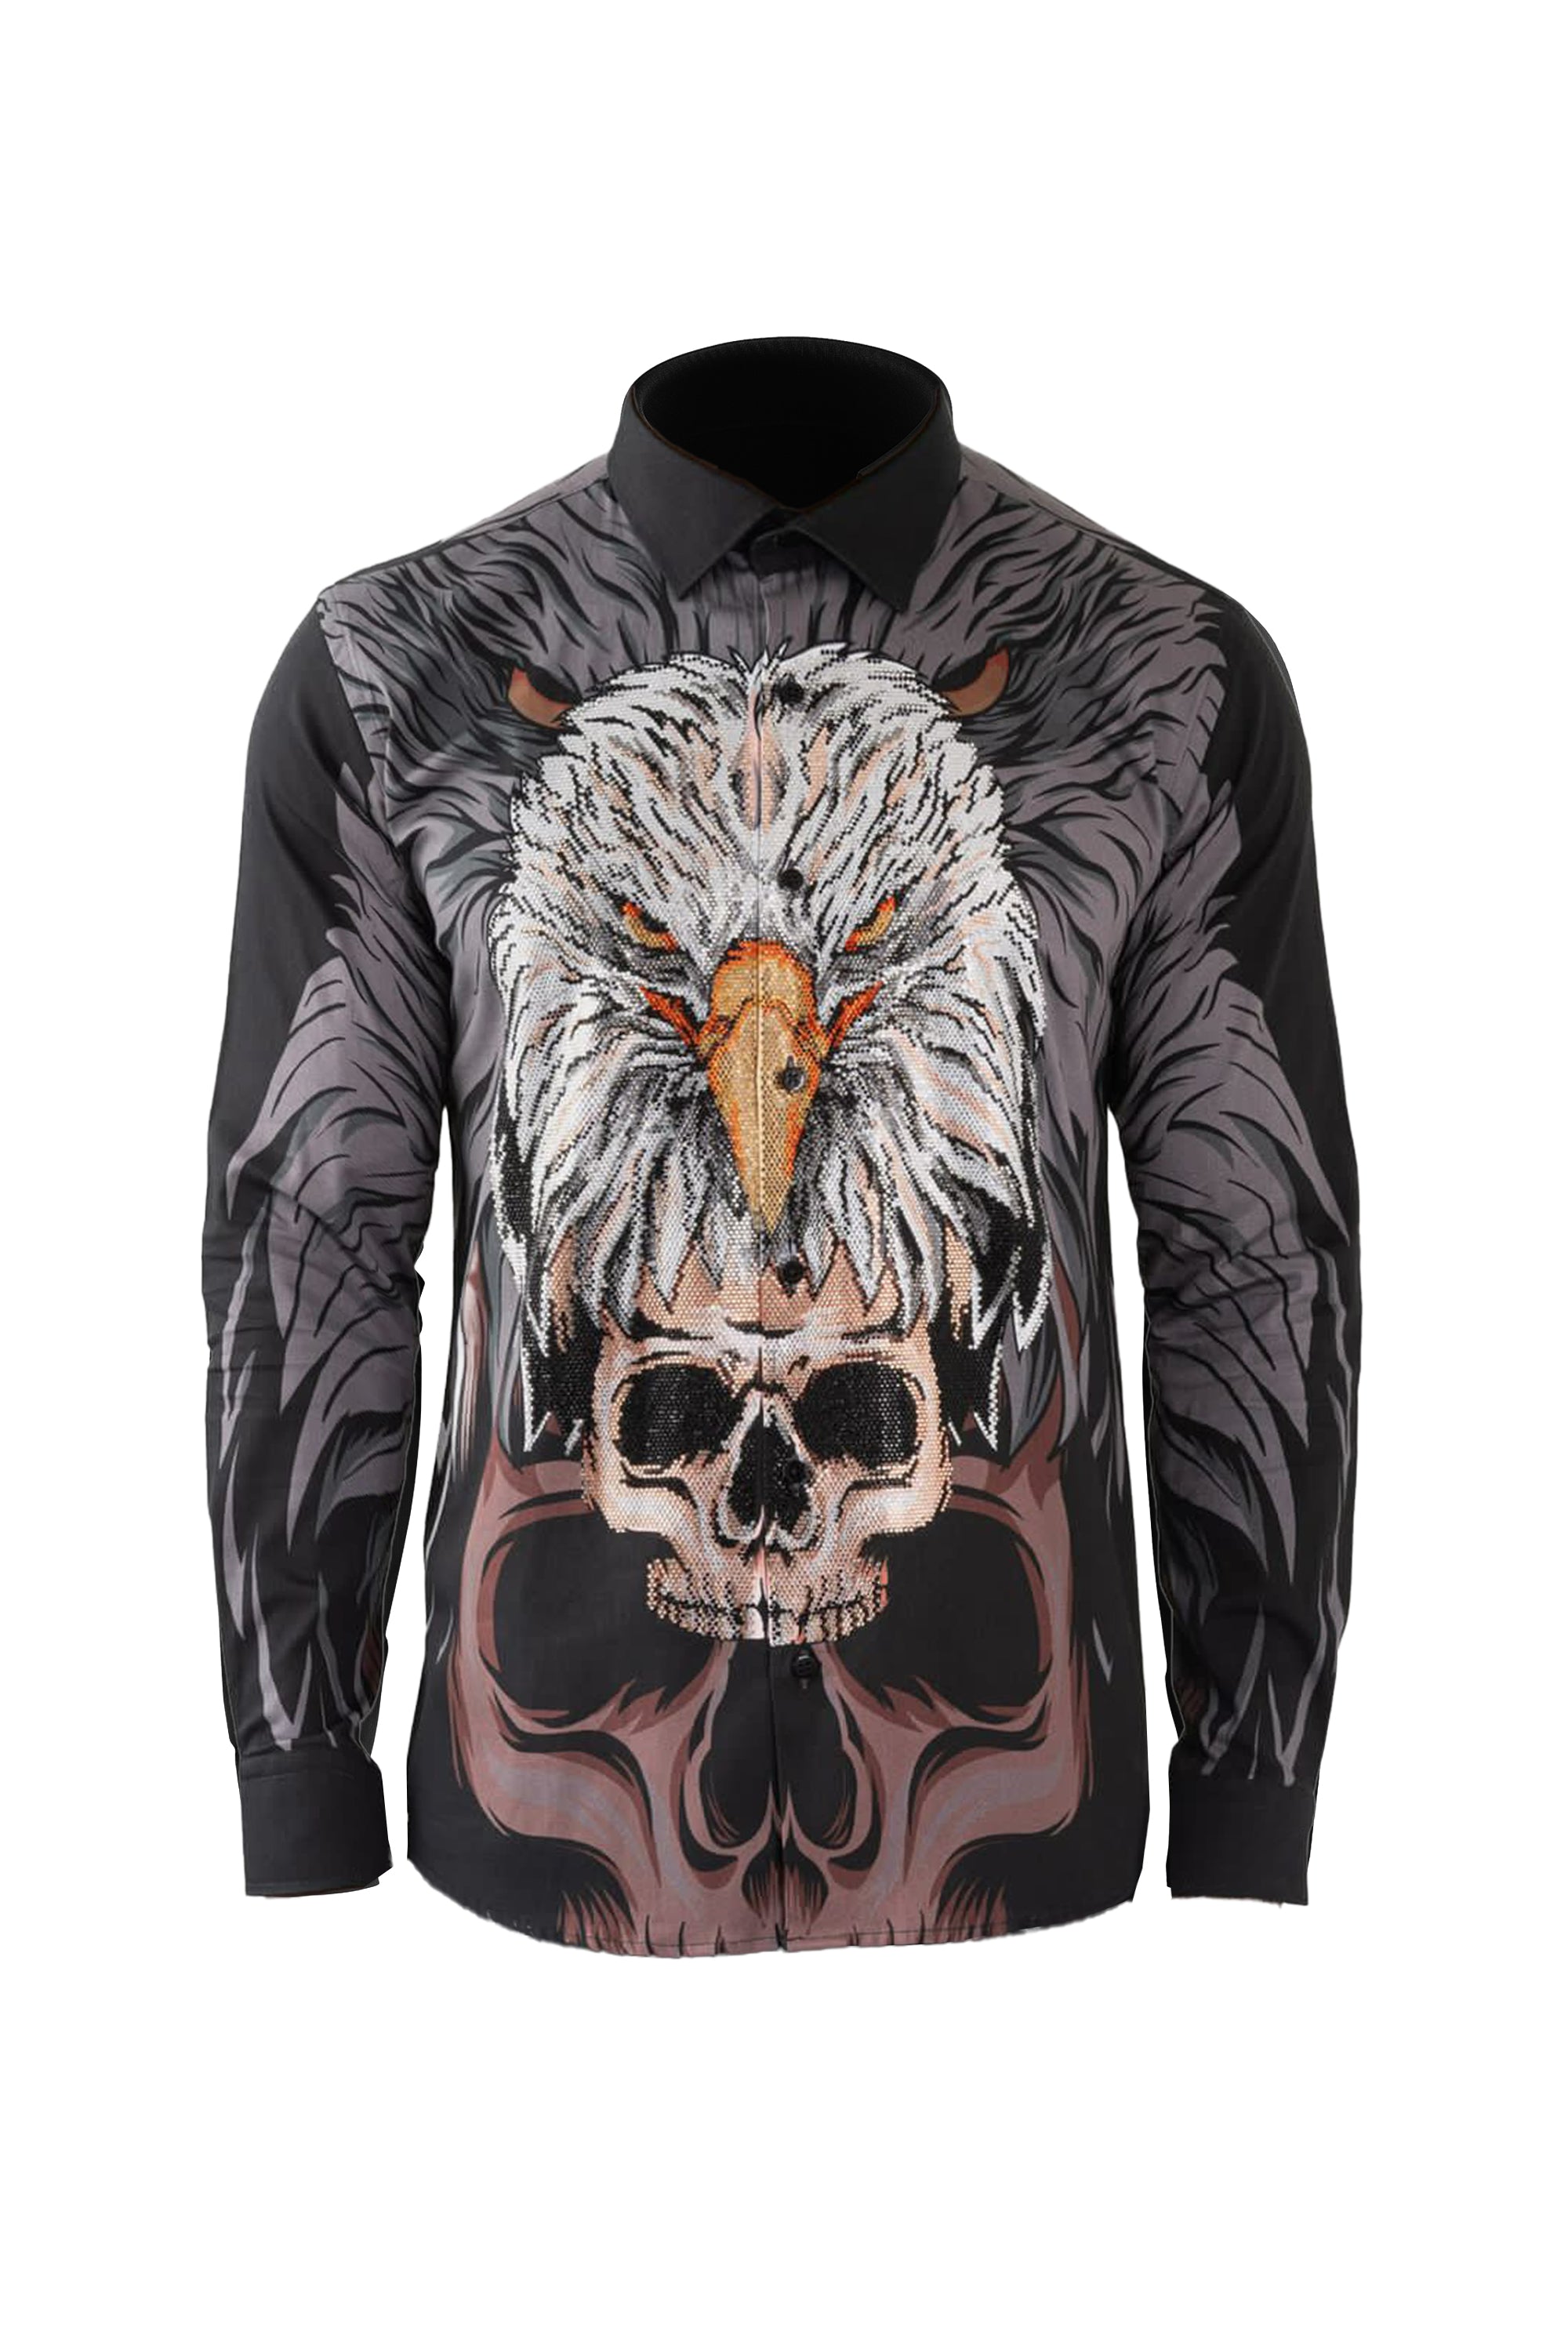 Vercini Avian Skull Illusion Men's Casual Shirt CASUAL SHIRT On Sale 30% Off Vercini